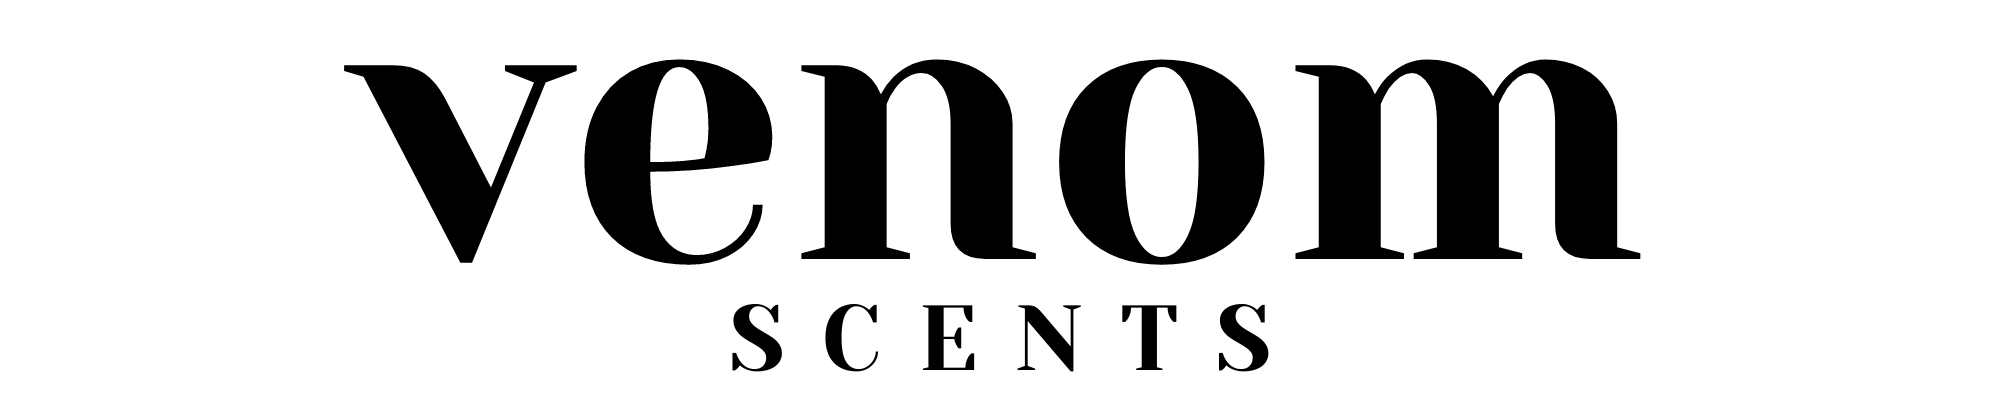 Venom Scent logo